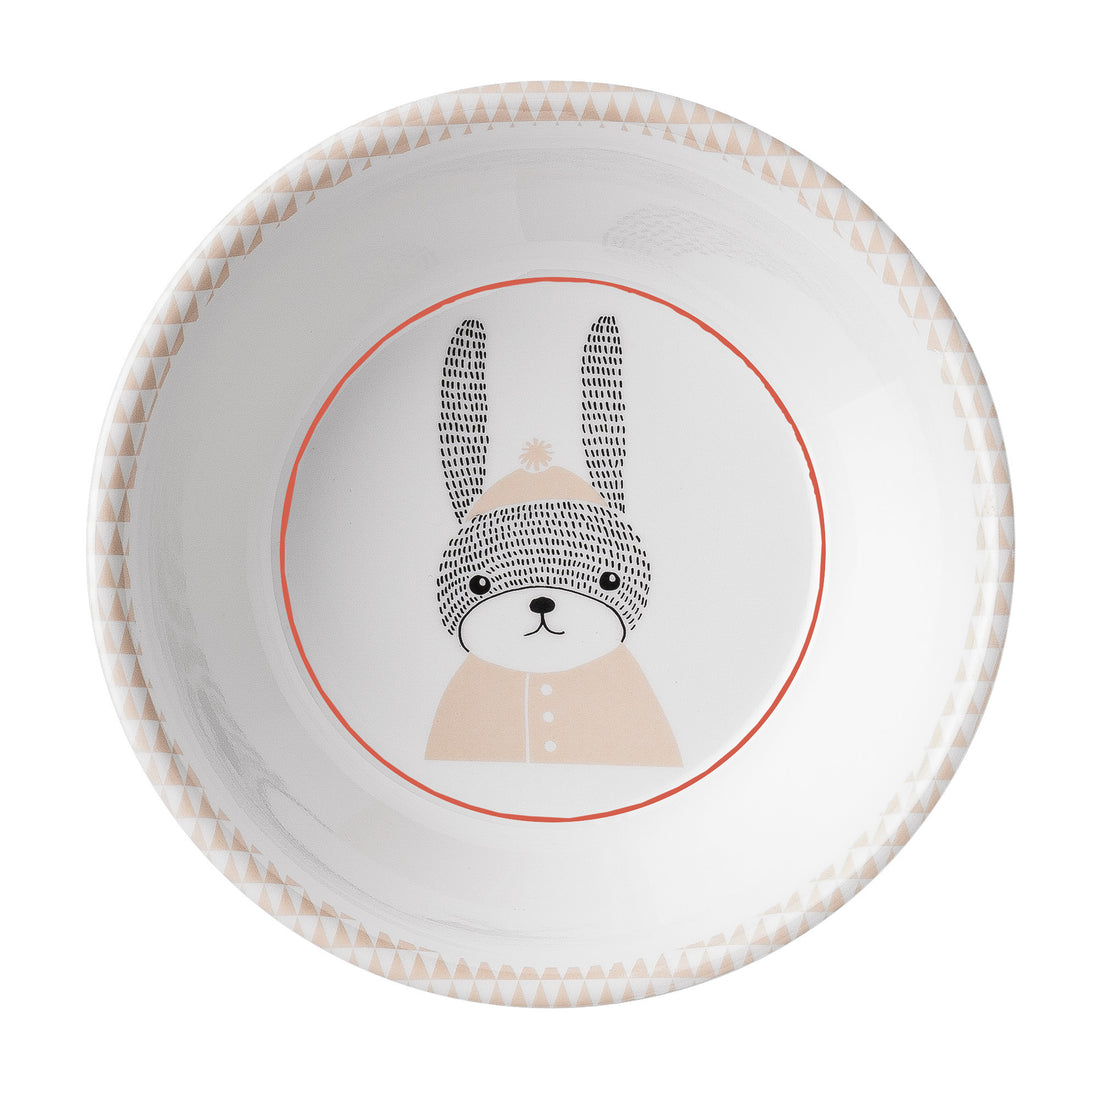 bloomingville-sophia-rabbit-white-and-nude-melamine-plate-kitchen-bmv-47300010-01